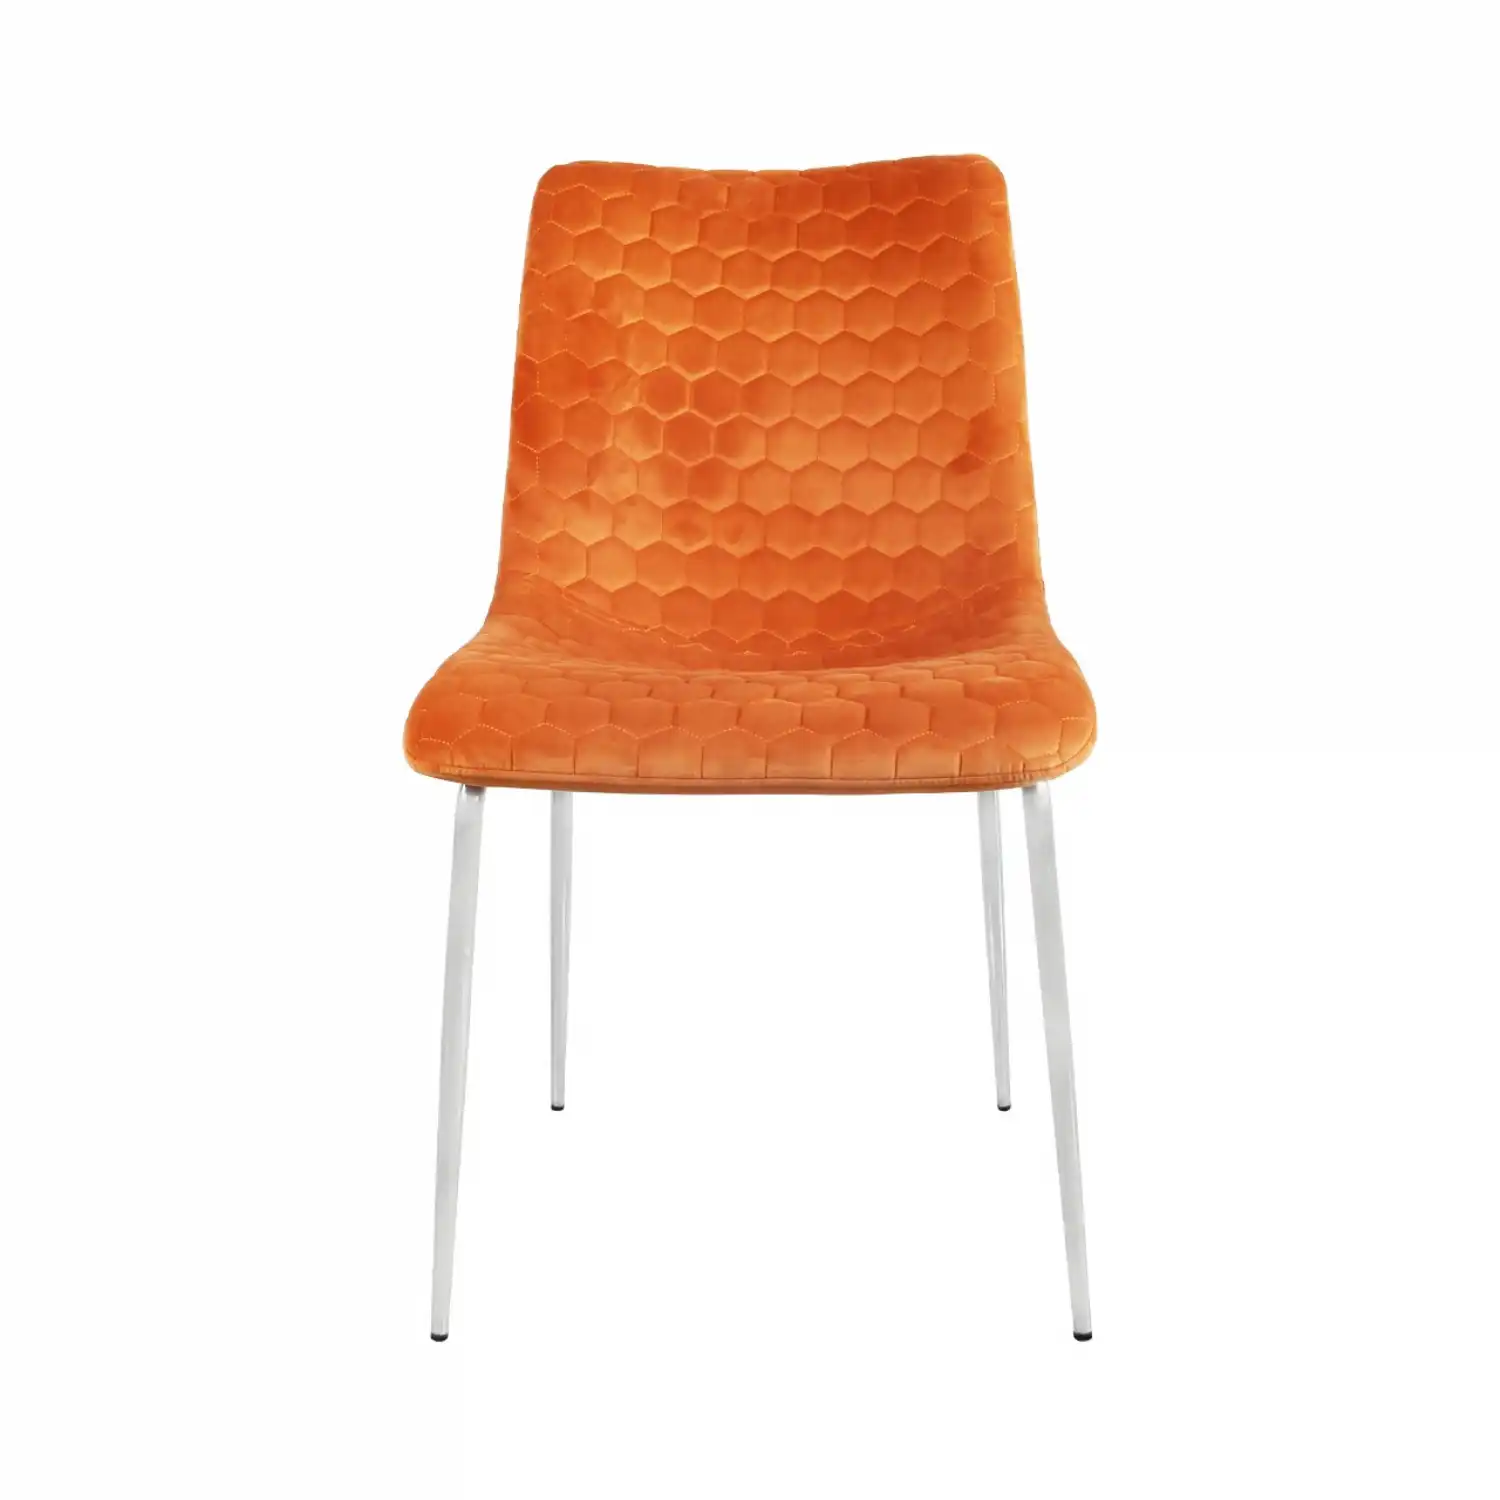 Orange Dining Chair Chrome Legs